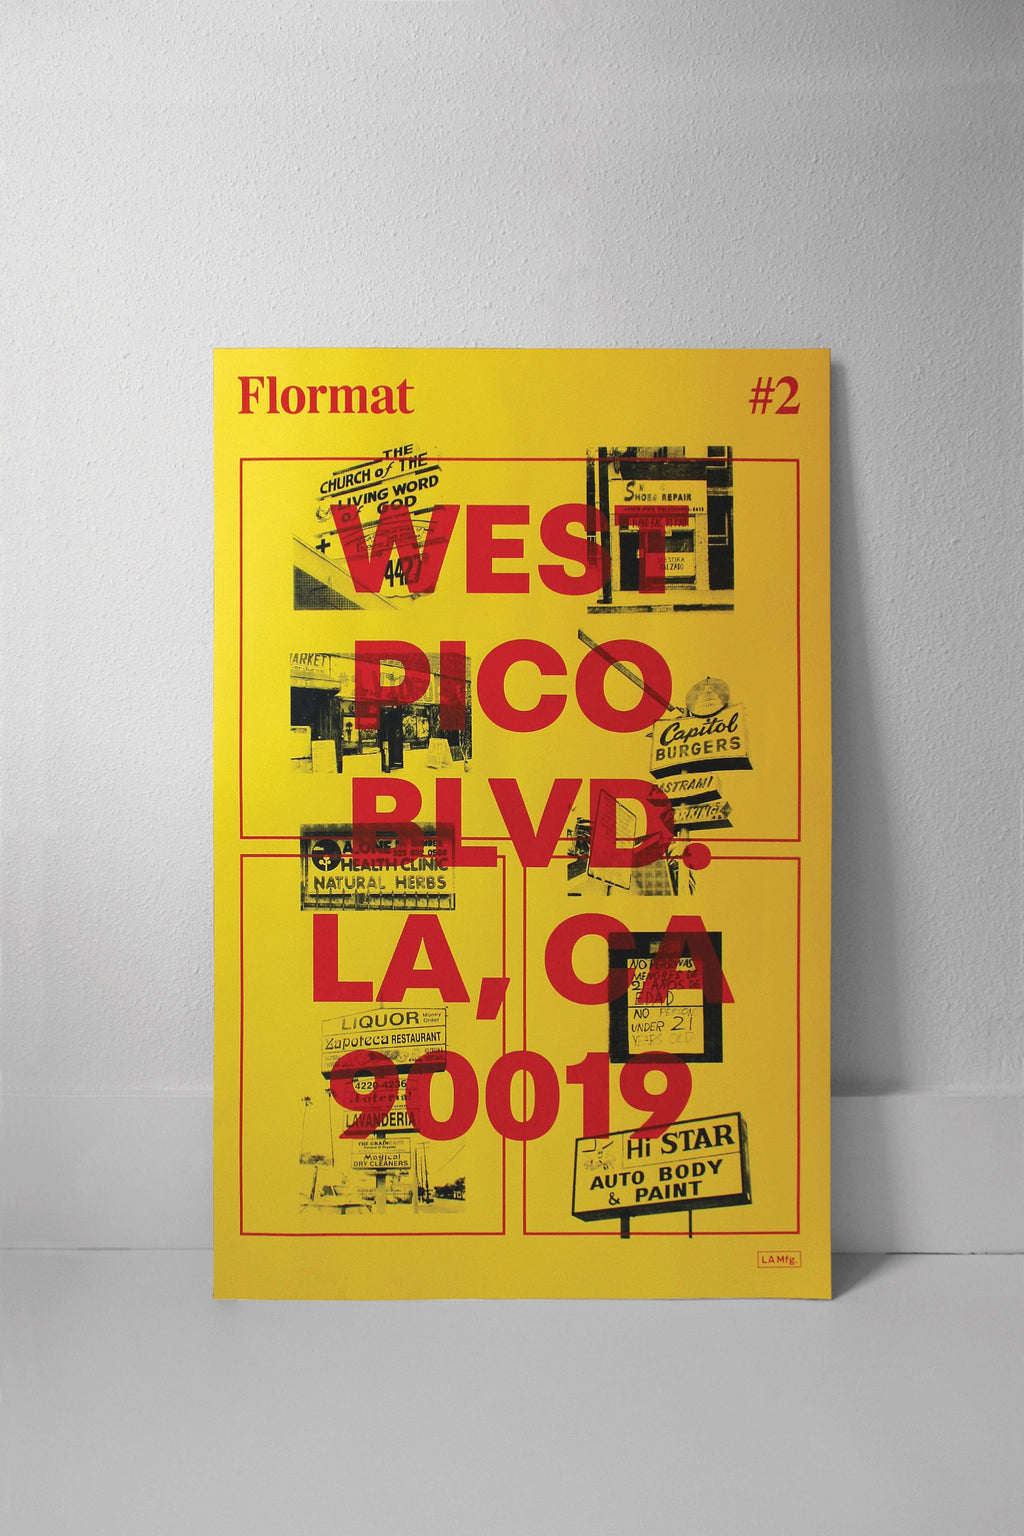 Flormat #2: West Pico Blvd., Los Angeles, CA 90019